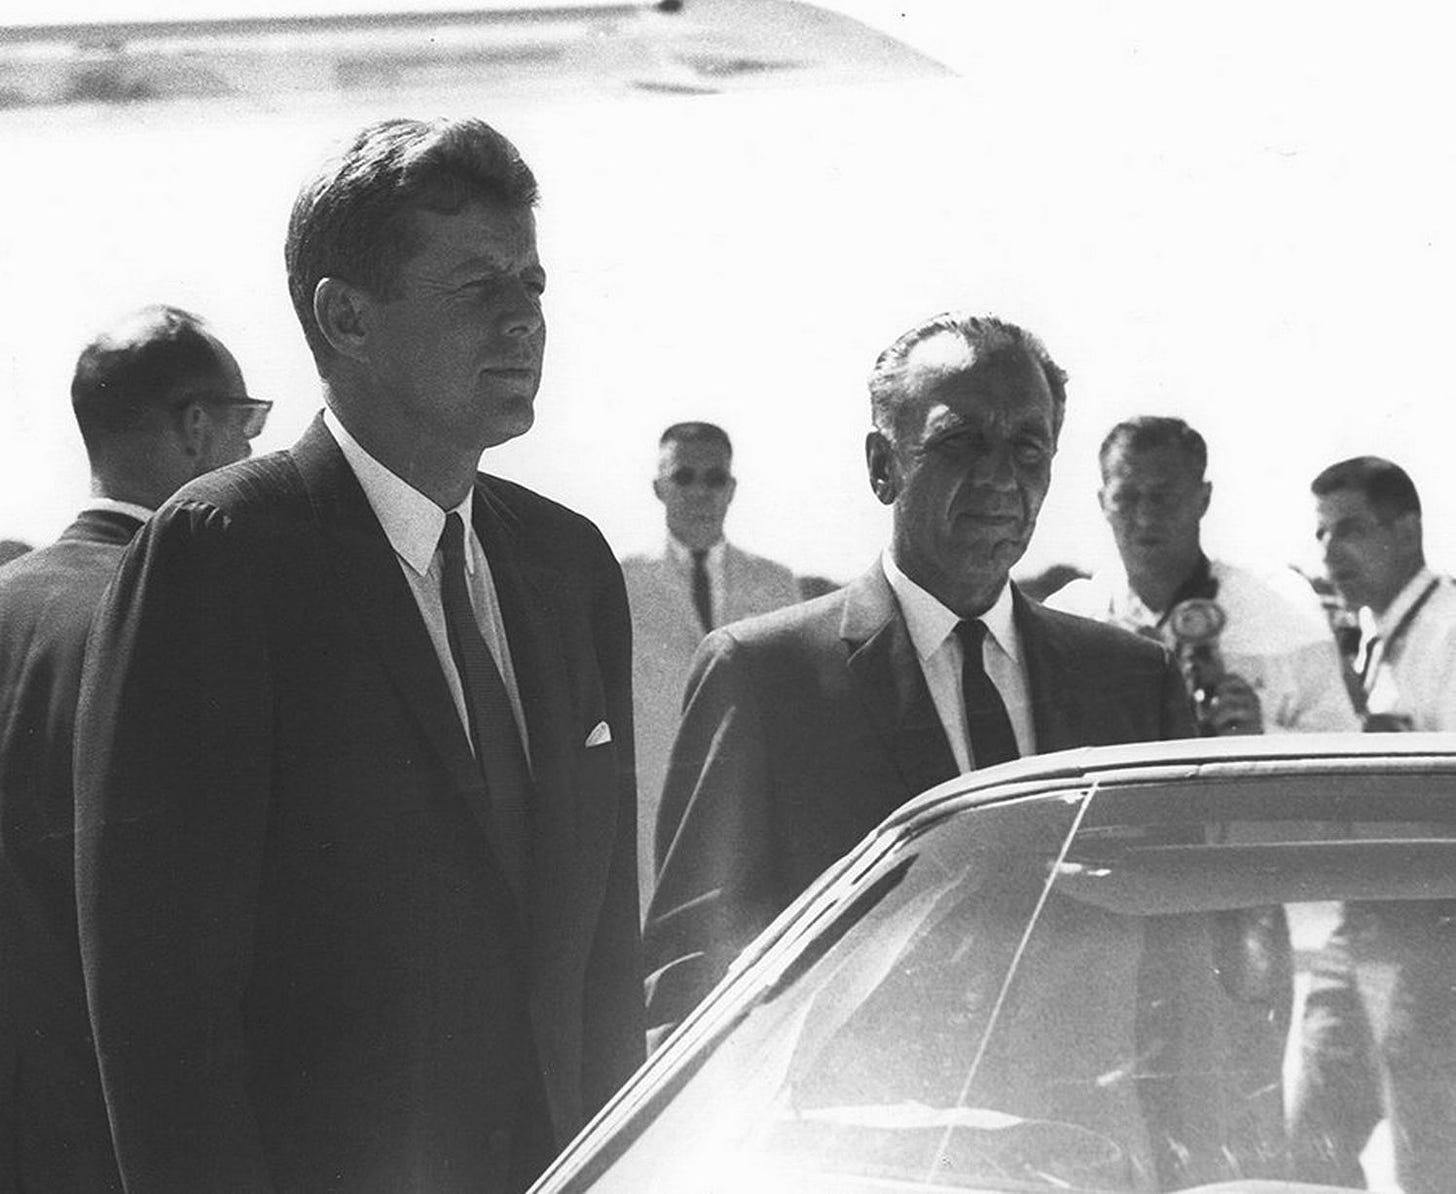 Former Nazi scientist turned head of NASA, Kurt Debus, with President John F Kennedy in 1962